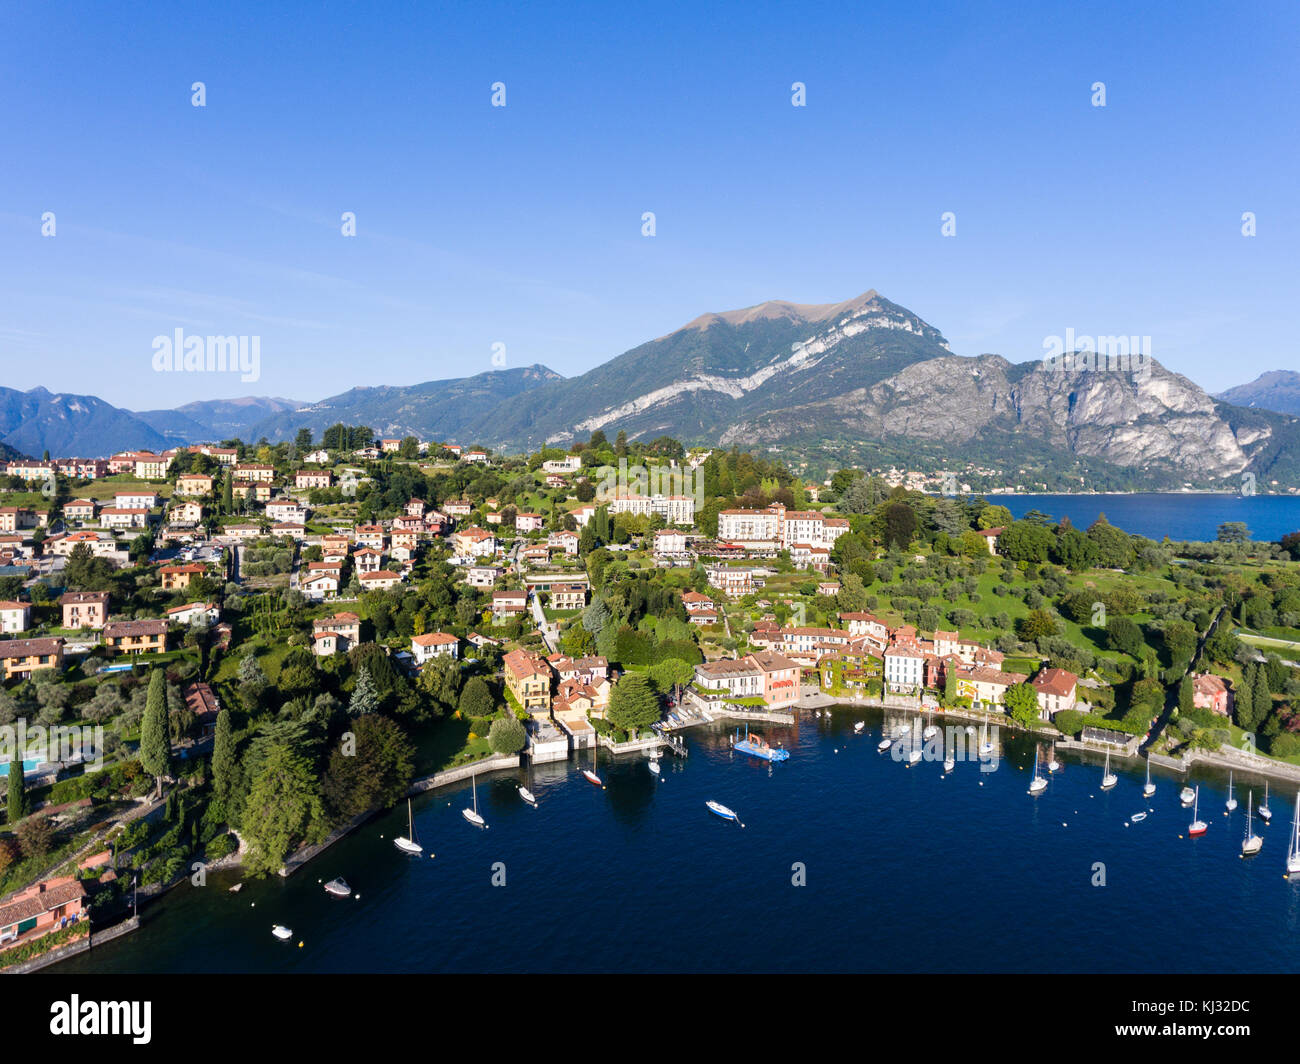 Tourist destination on Como lake, village of Pescallo near Bellagio in Italy Stock Photo